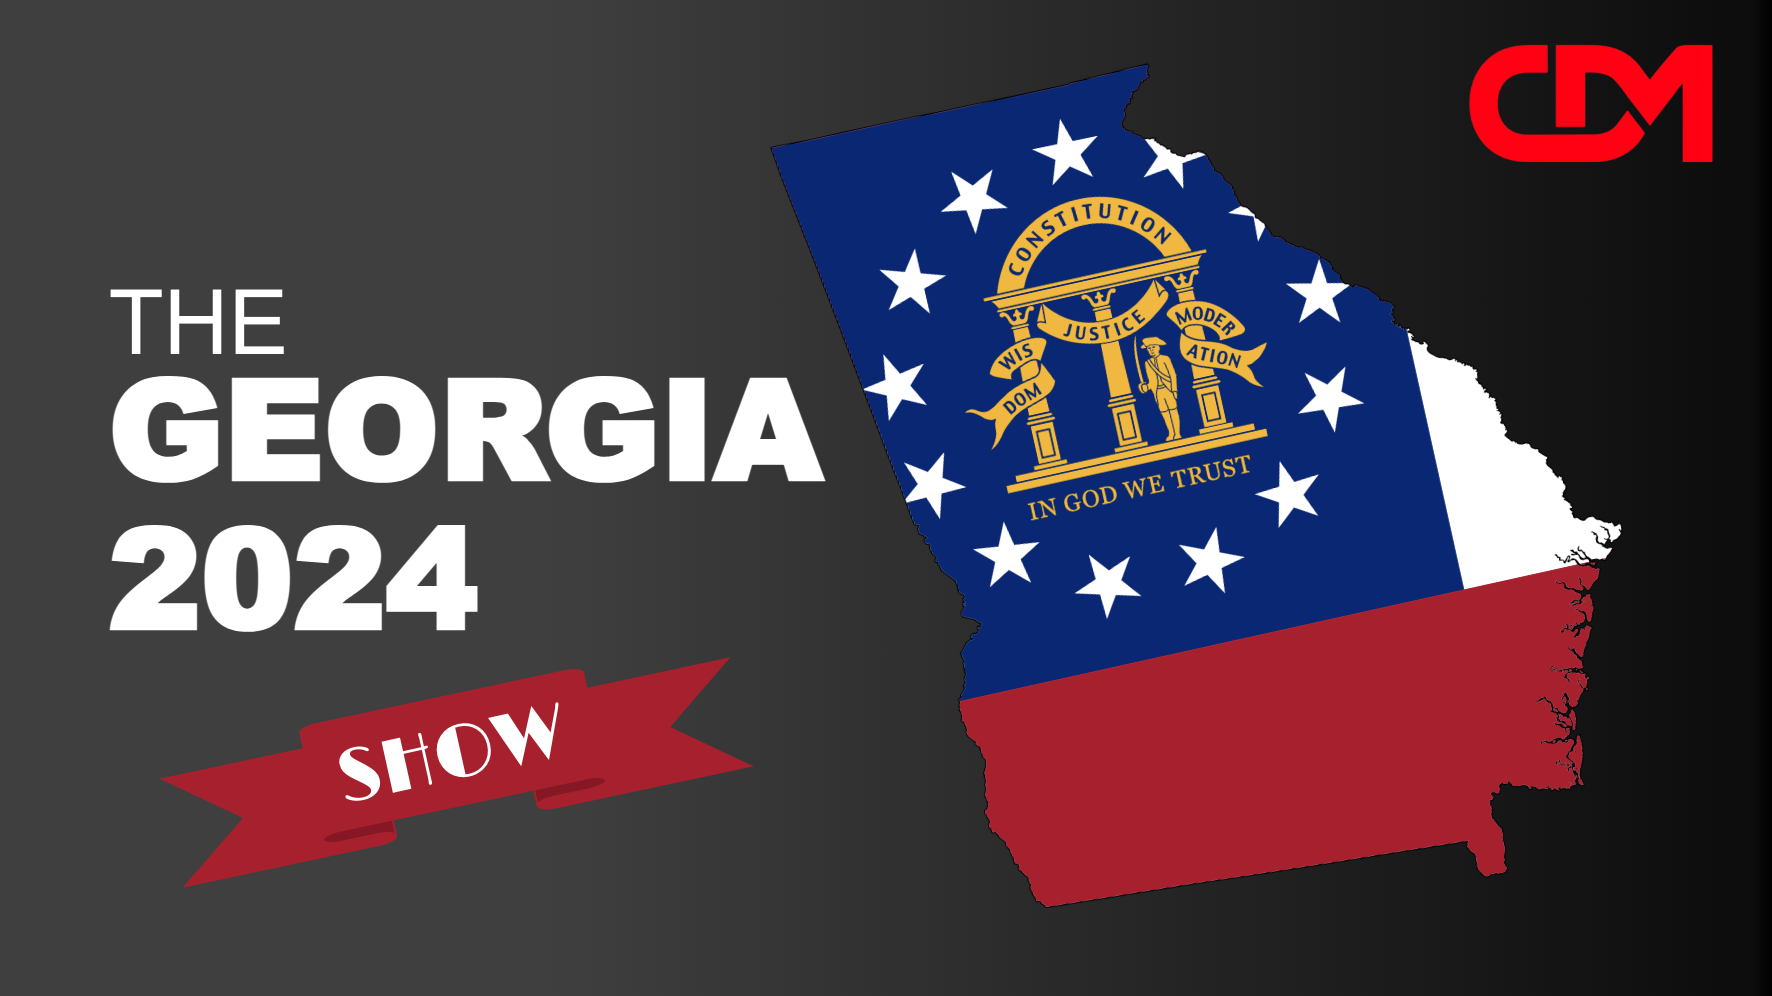 LIVE 7pm EST: The Georgia 2024 Show! With John Gordon, Dan Schultz, Father Troy Beecham